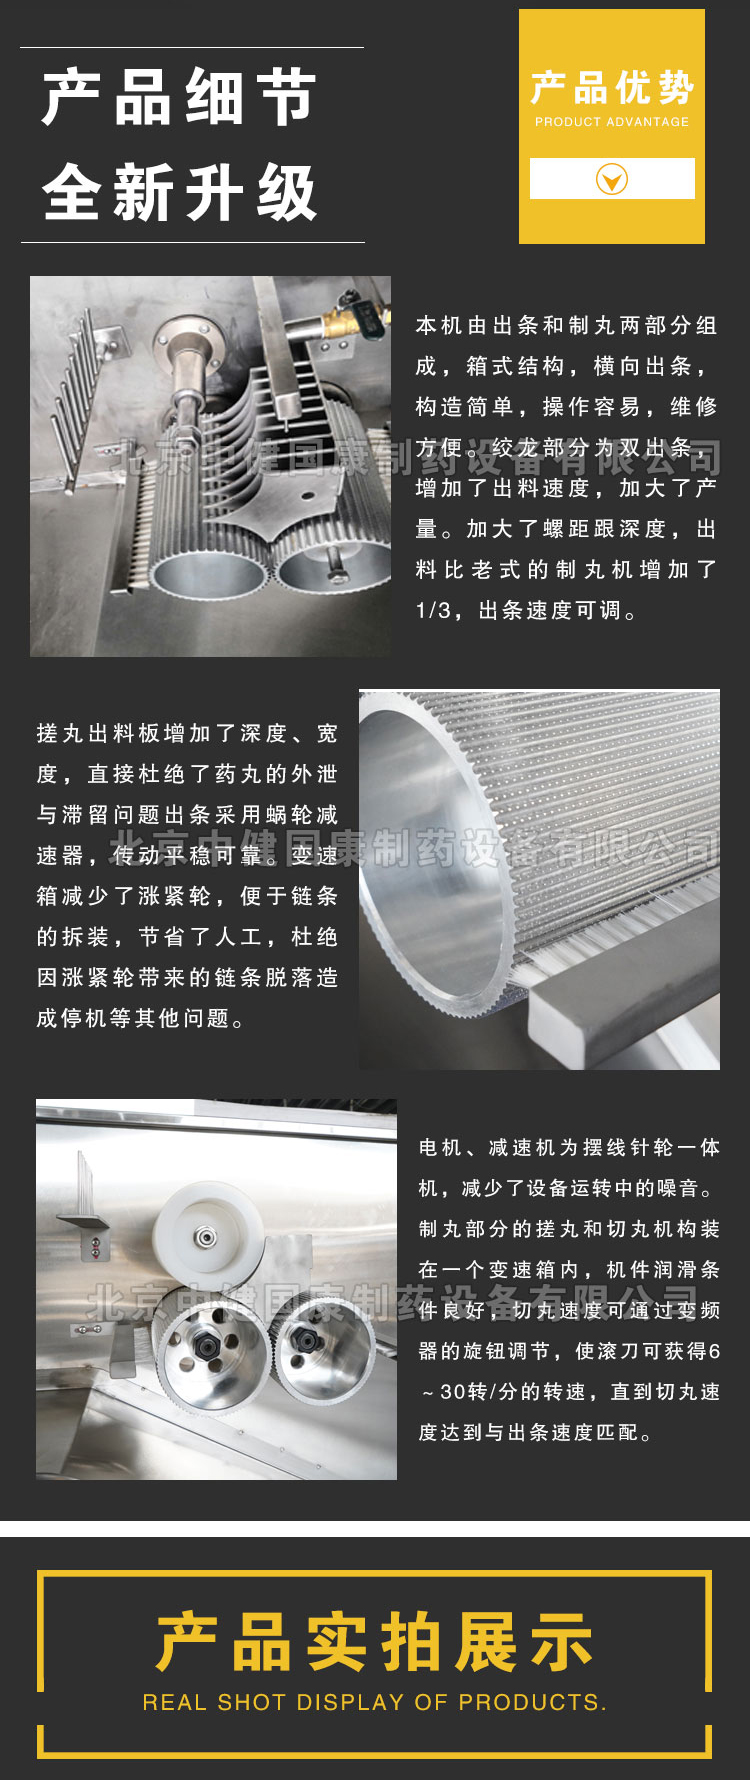 Zhongjian Guokang full-automatic pelletizing machine Liu Wei Di Huang Wan pelletizing machine working face has no dead corner and good sealing performance